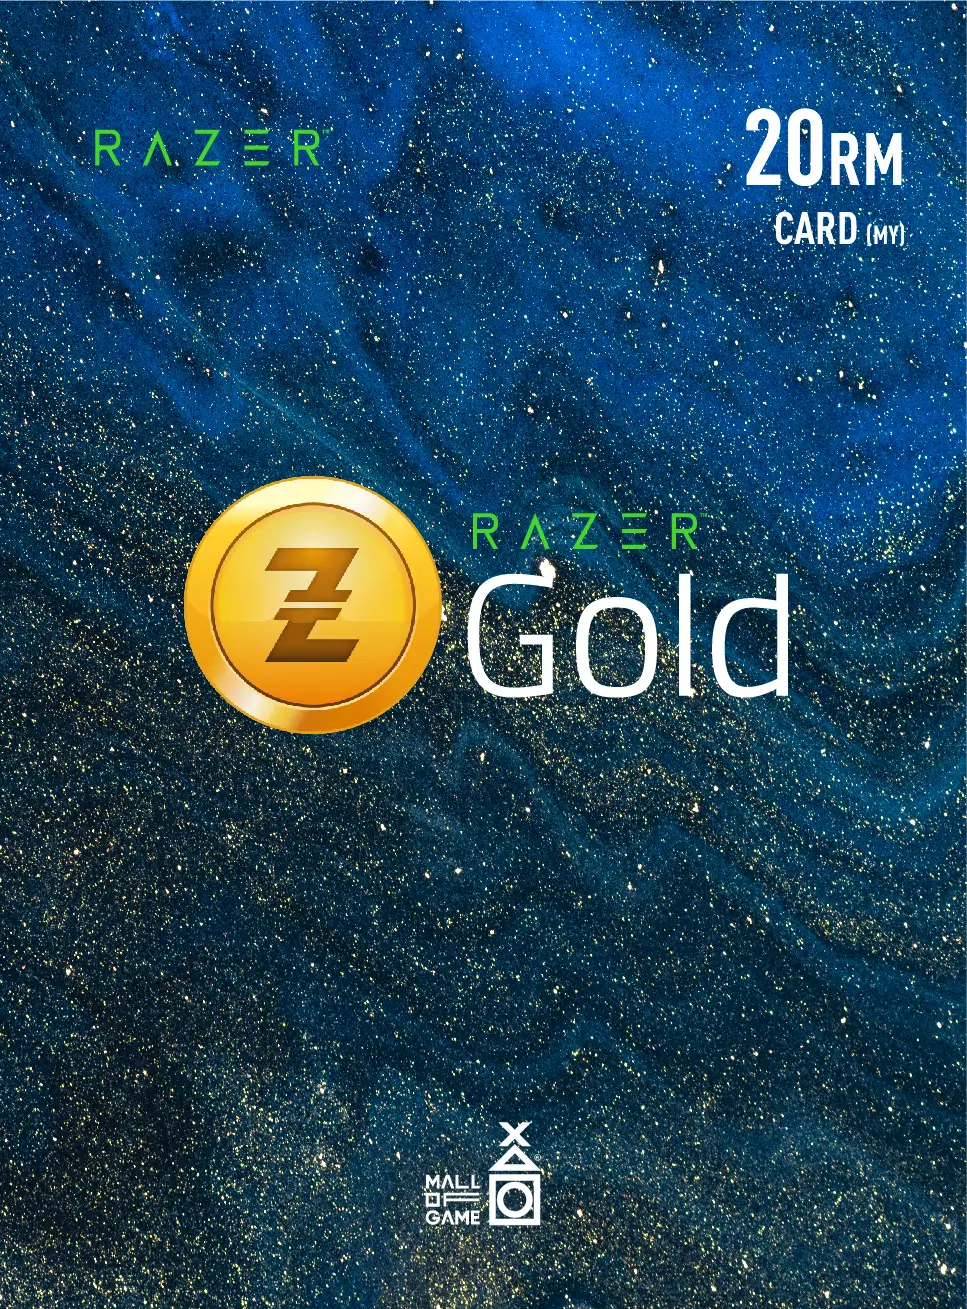 Razer Gold RM20 (MY)